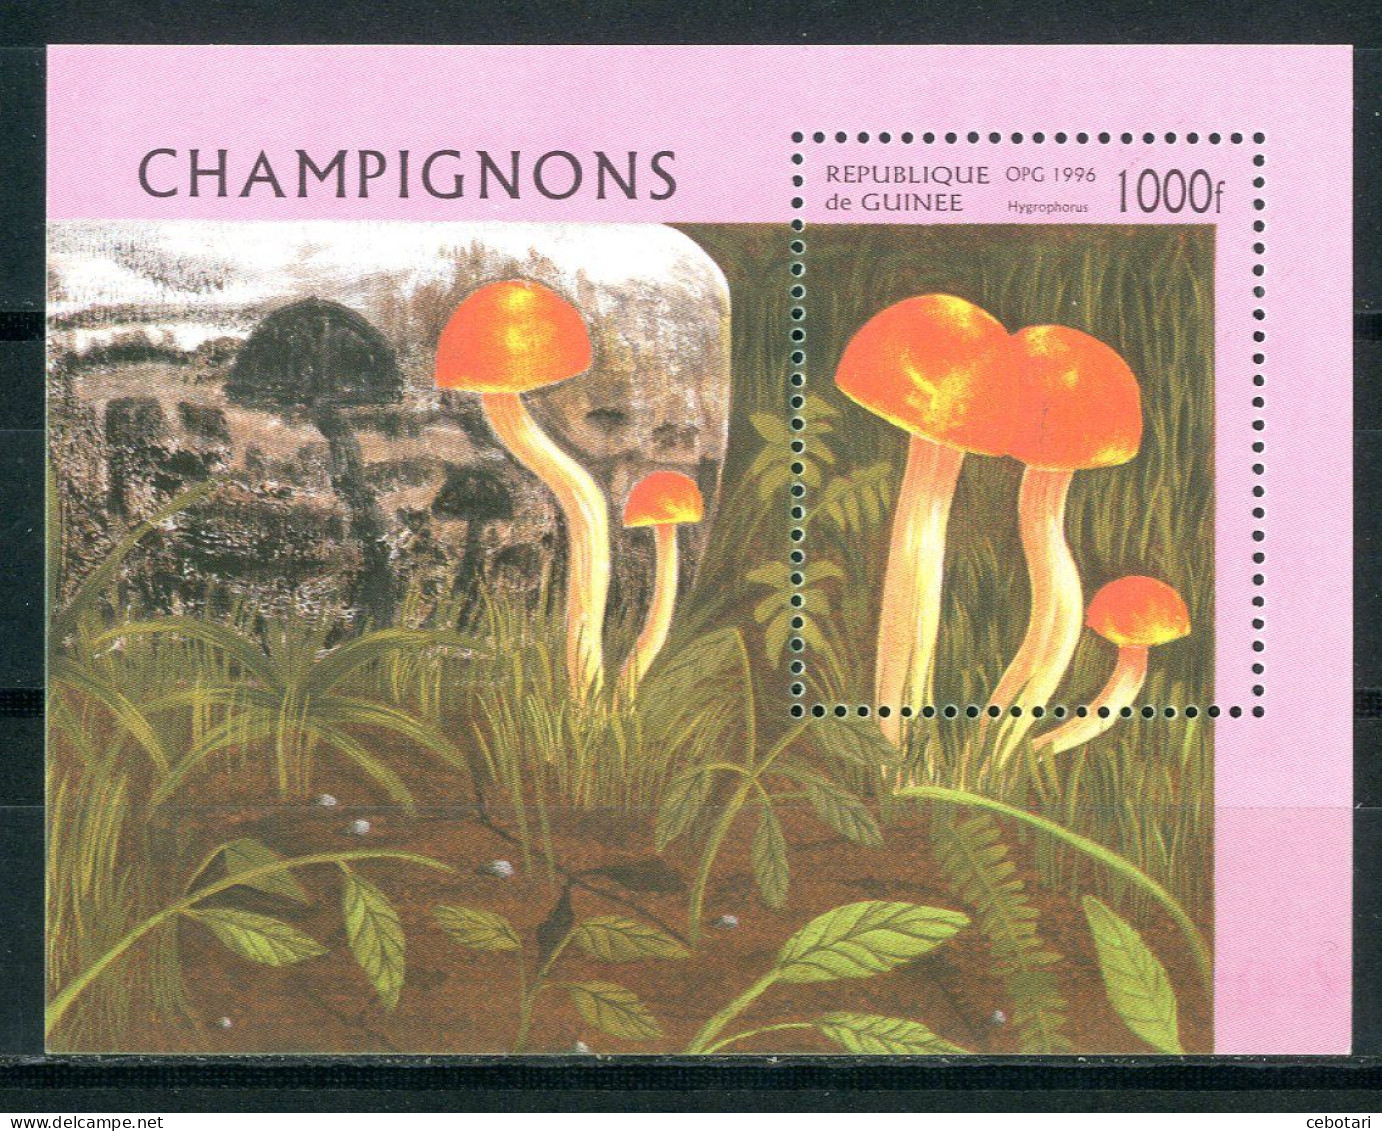 GUINEA / GUINEE 1996** - Funghi / Mushrooms - Miniblock. - Champignons